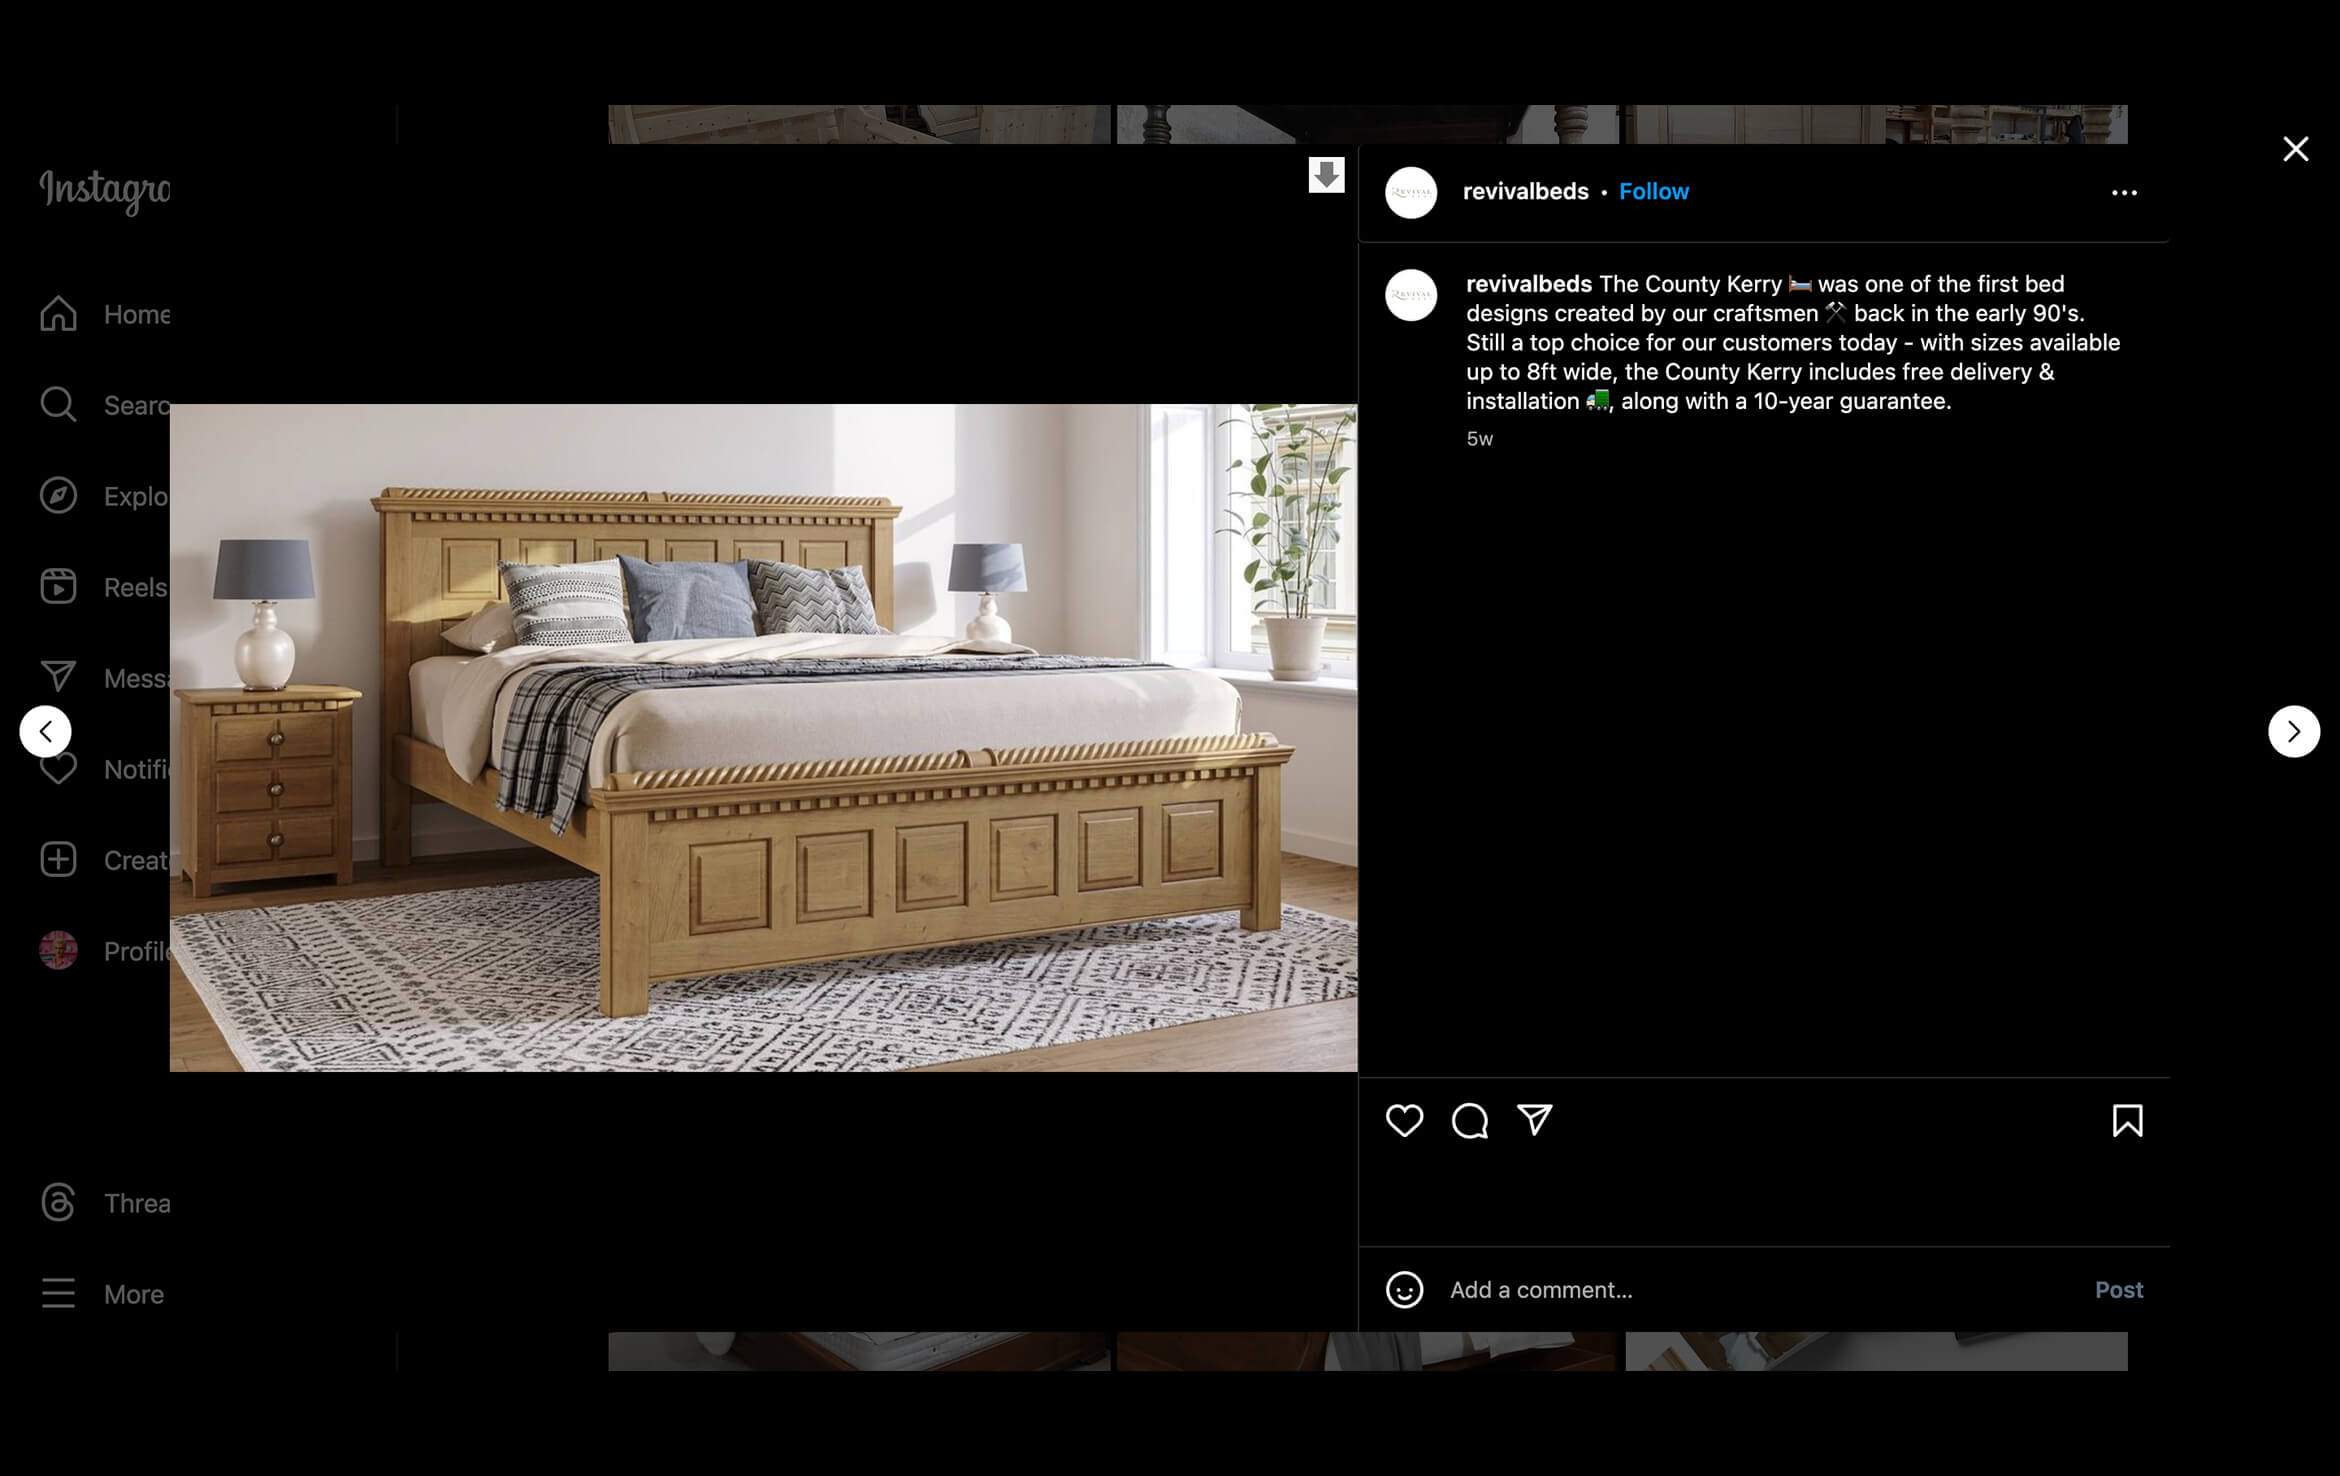 Bedroom Furniture Rendering for a Revival Beds' Instagram Page